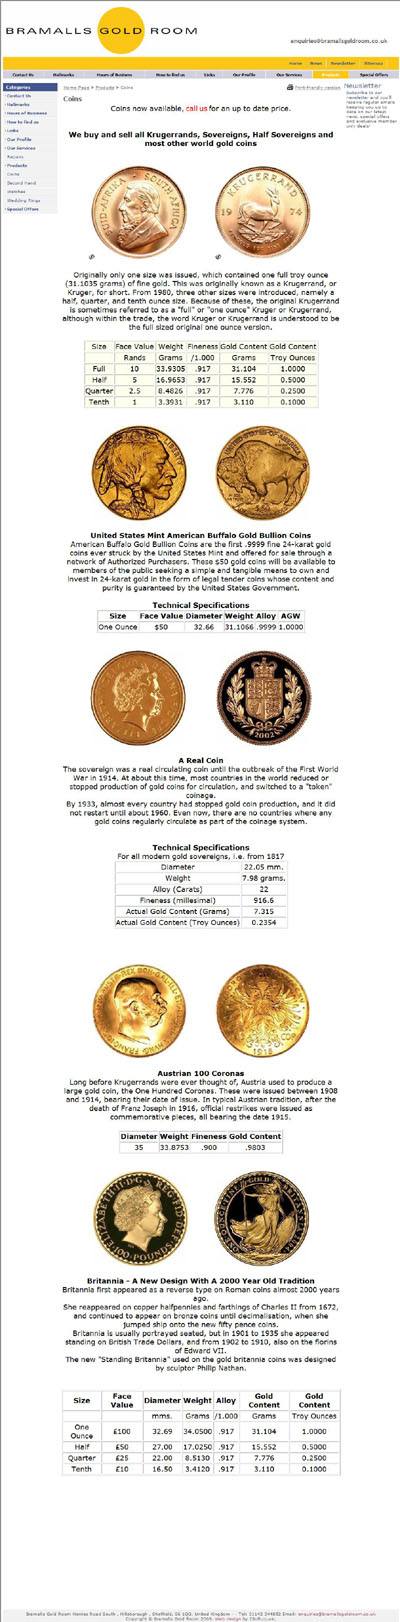 Bramalls Gold Room (bramallsgoldroom.co.uk) Gold Coins Page